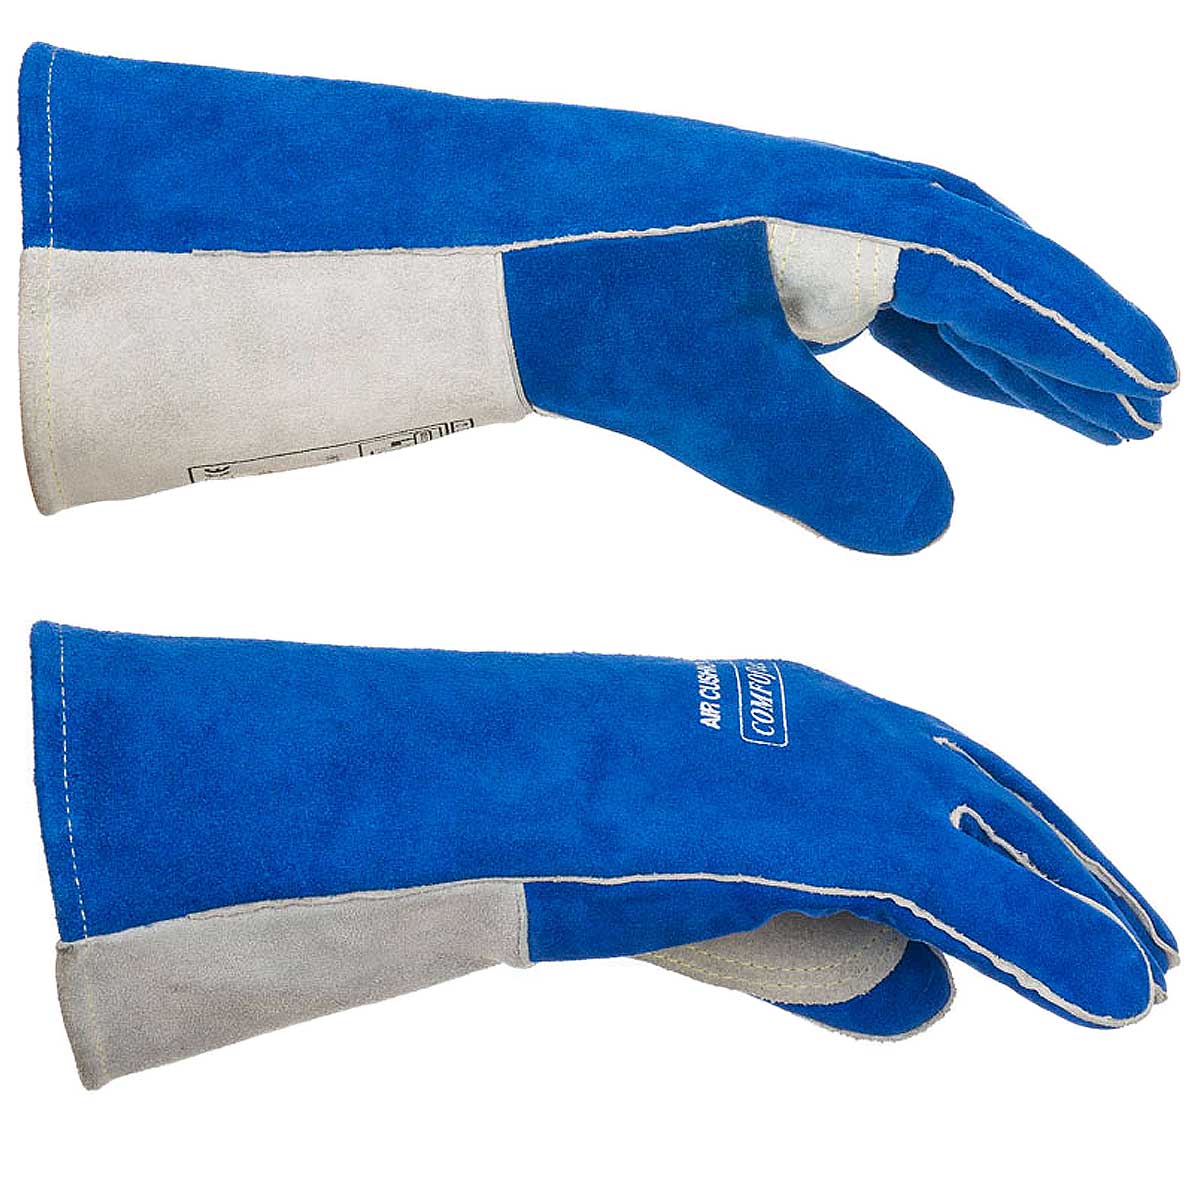 Elmag 5-Finger MIG/MAG/MMA Welding Gloves